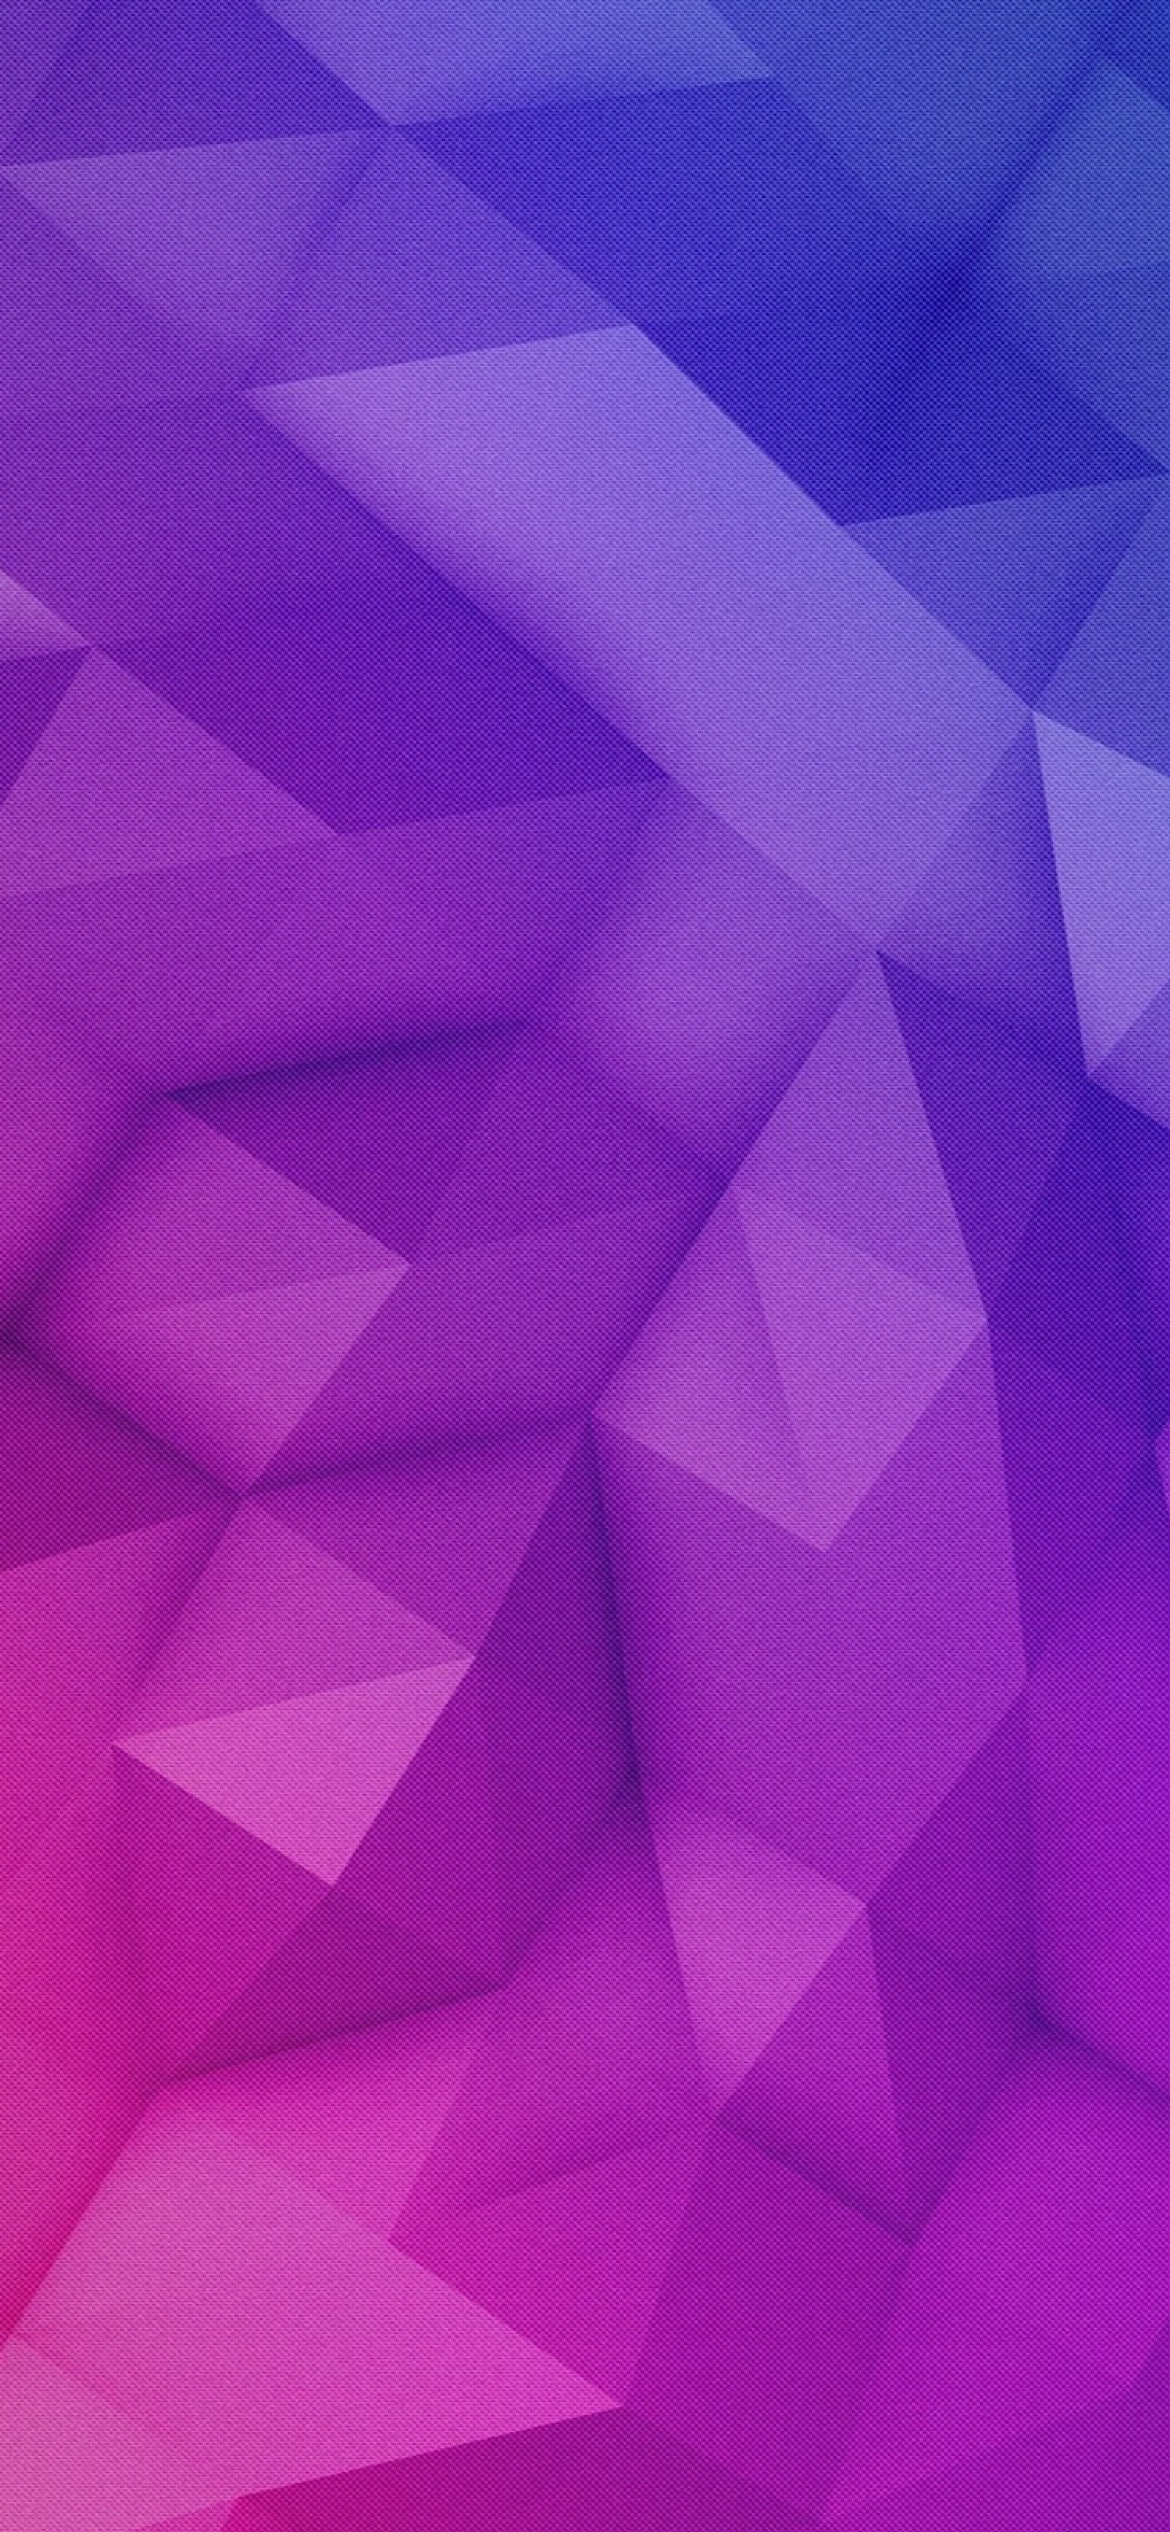 17 Purple And Blue Geometric Wallpapers  WallpaperSafari